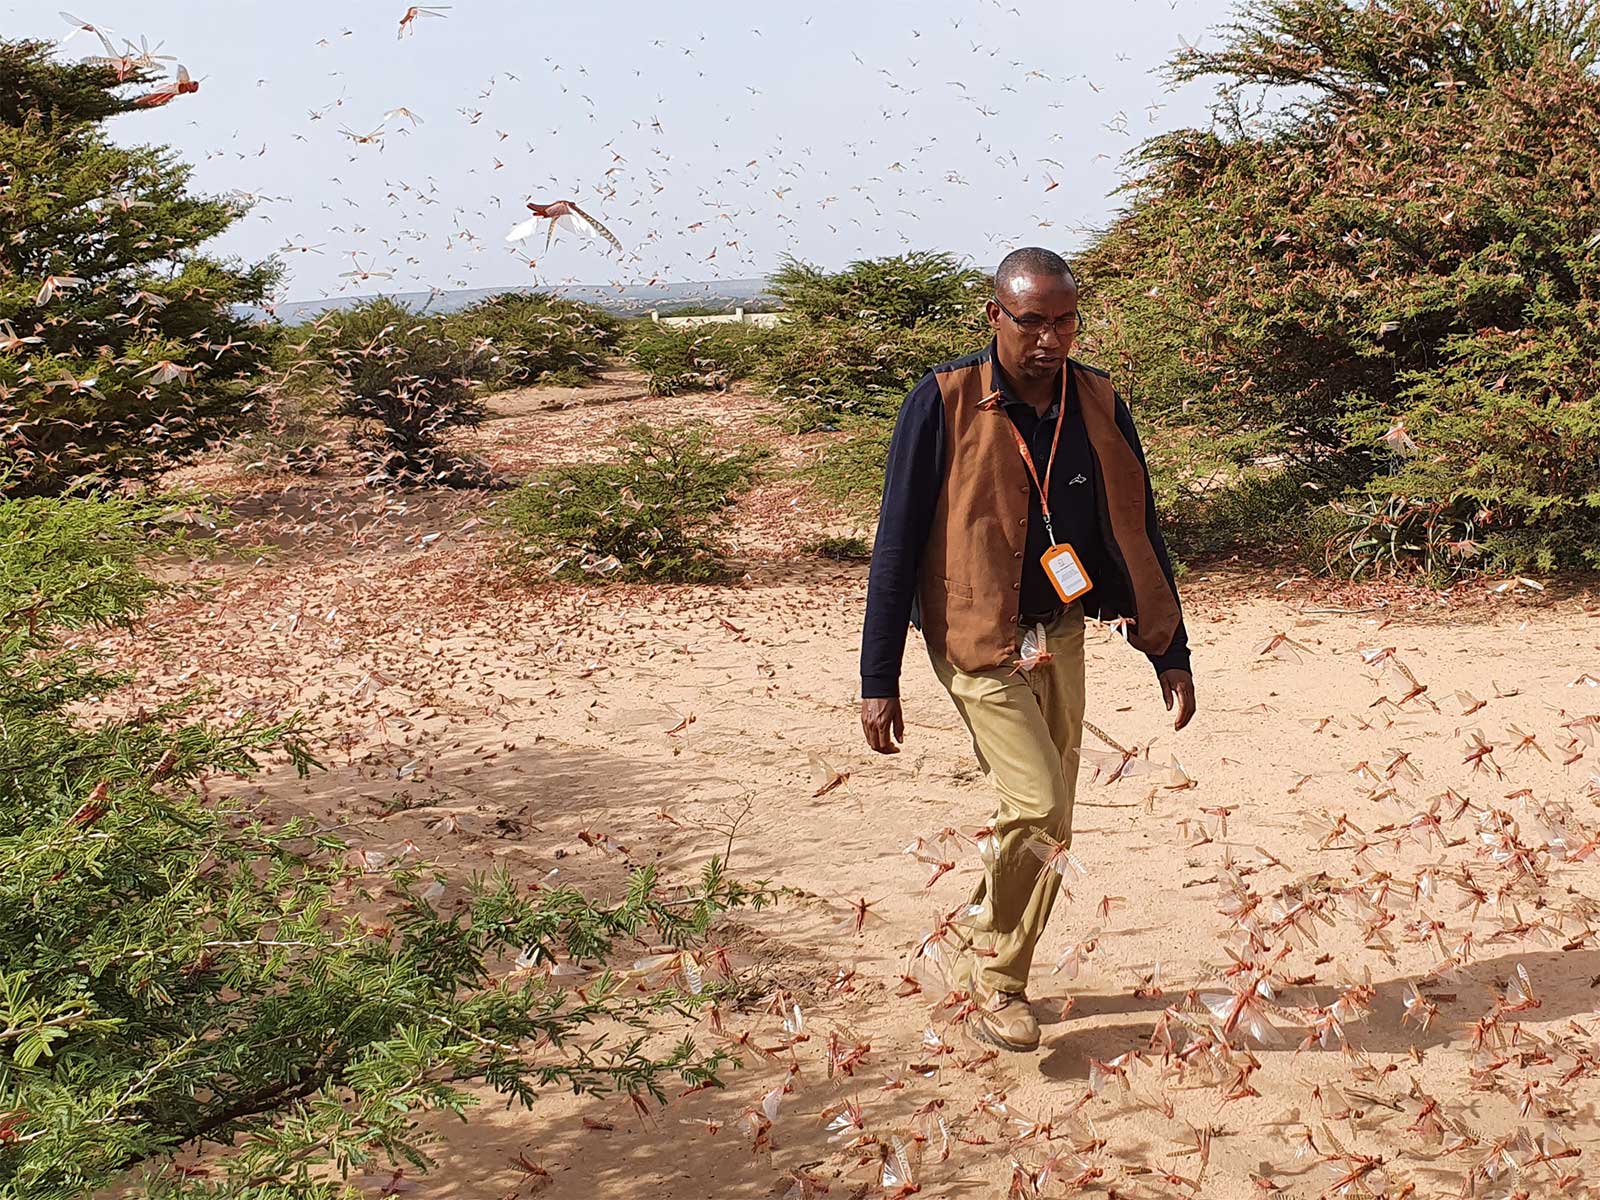 A man walks down a sandy path as locusts swarm around him.